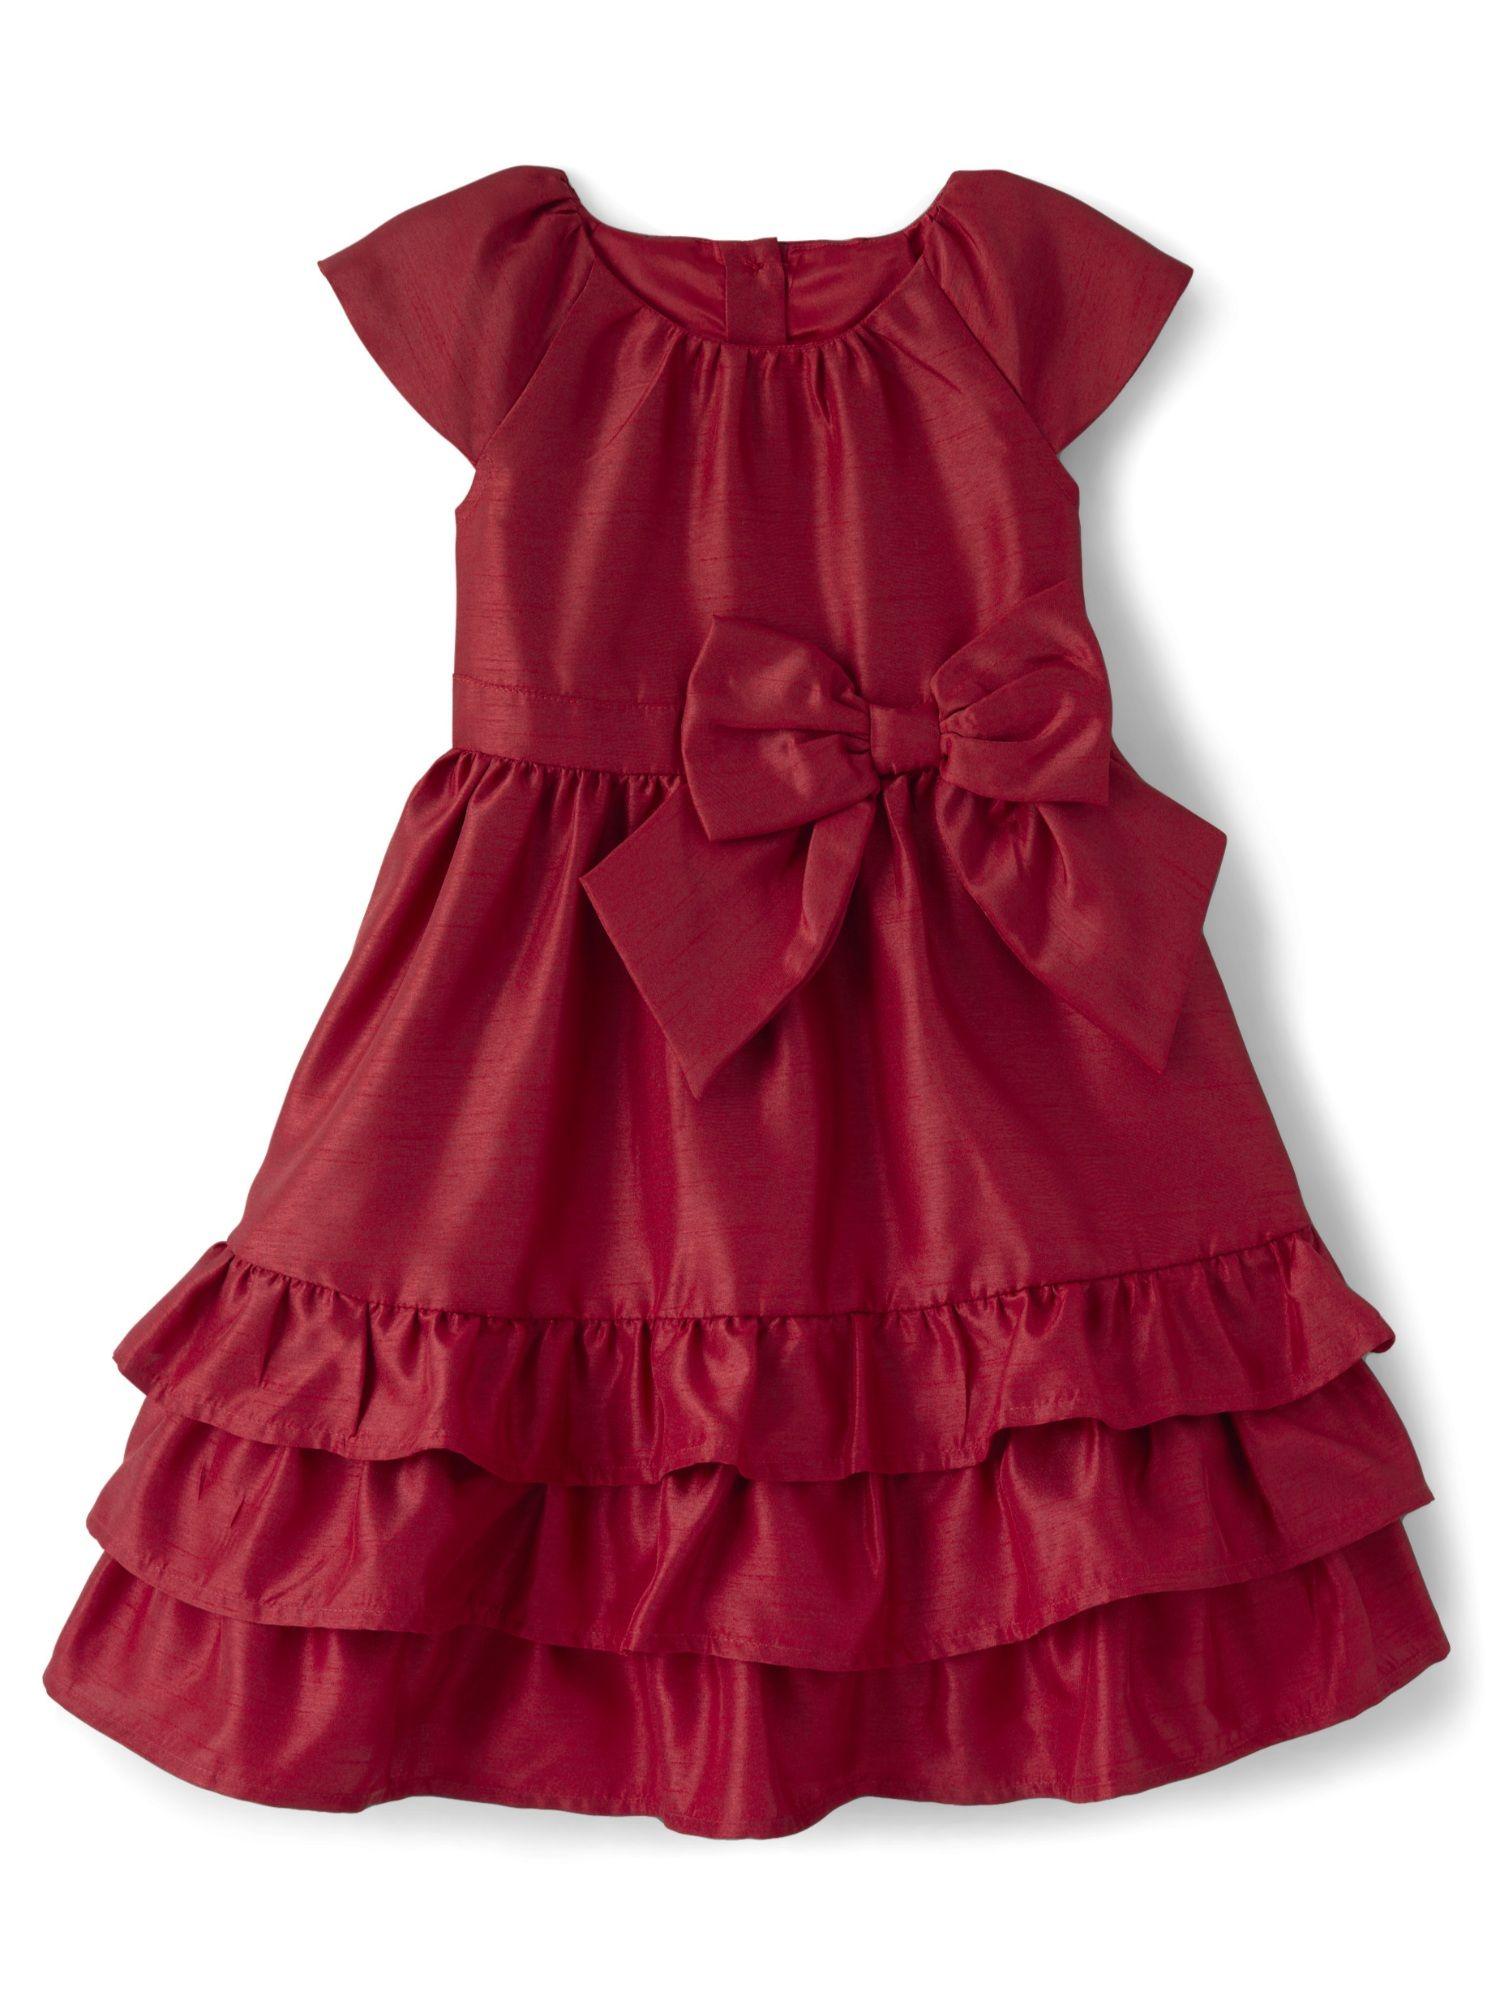 girls red ruffles bow frock dresses (12-18 months)